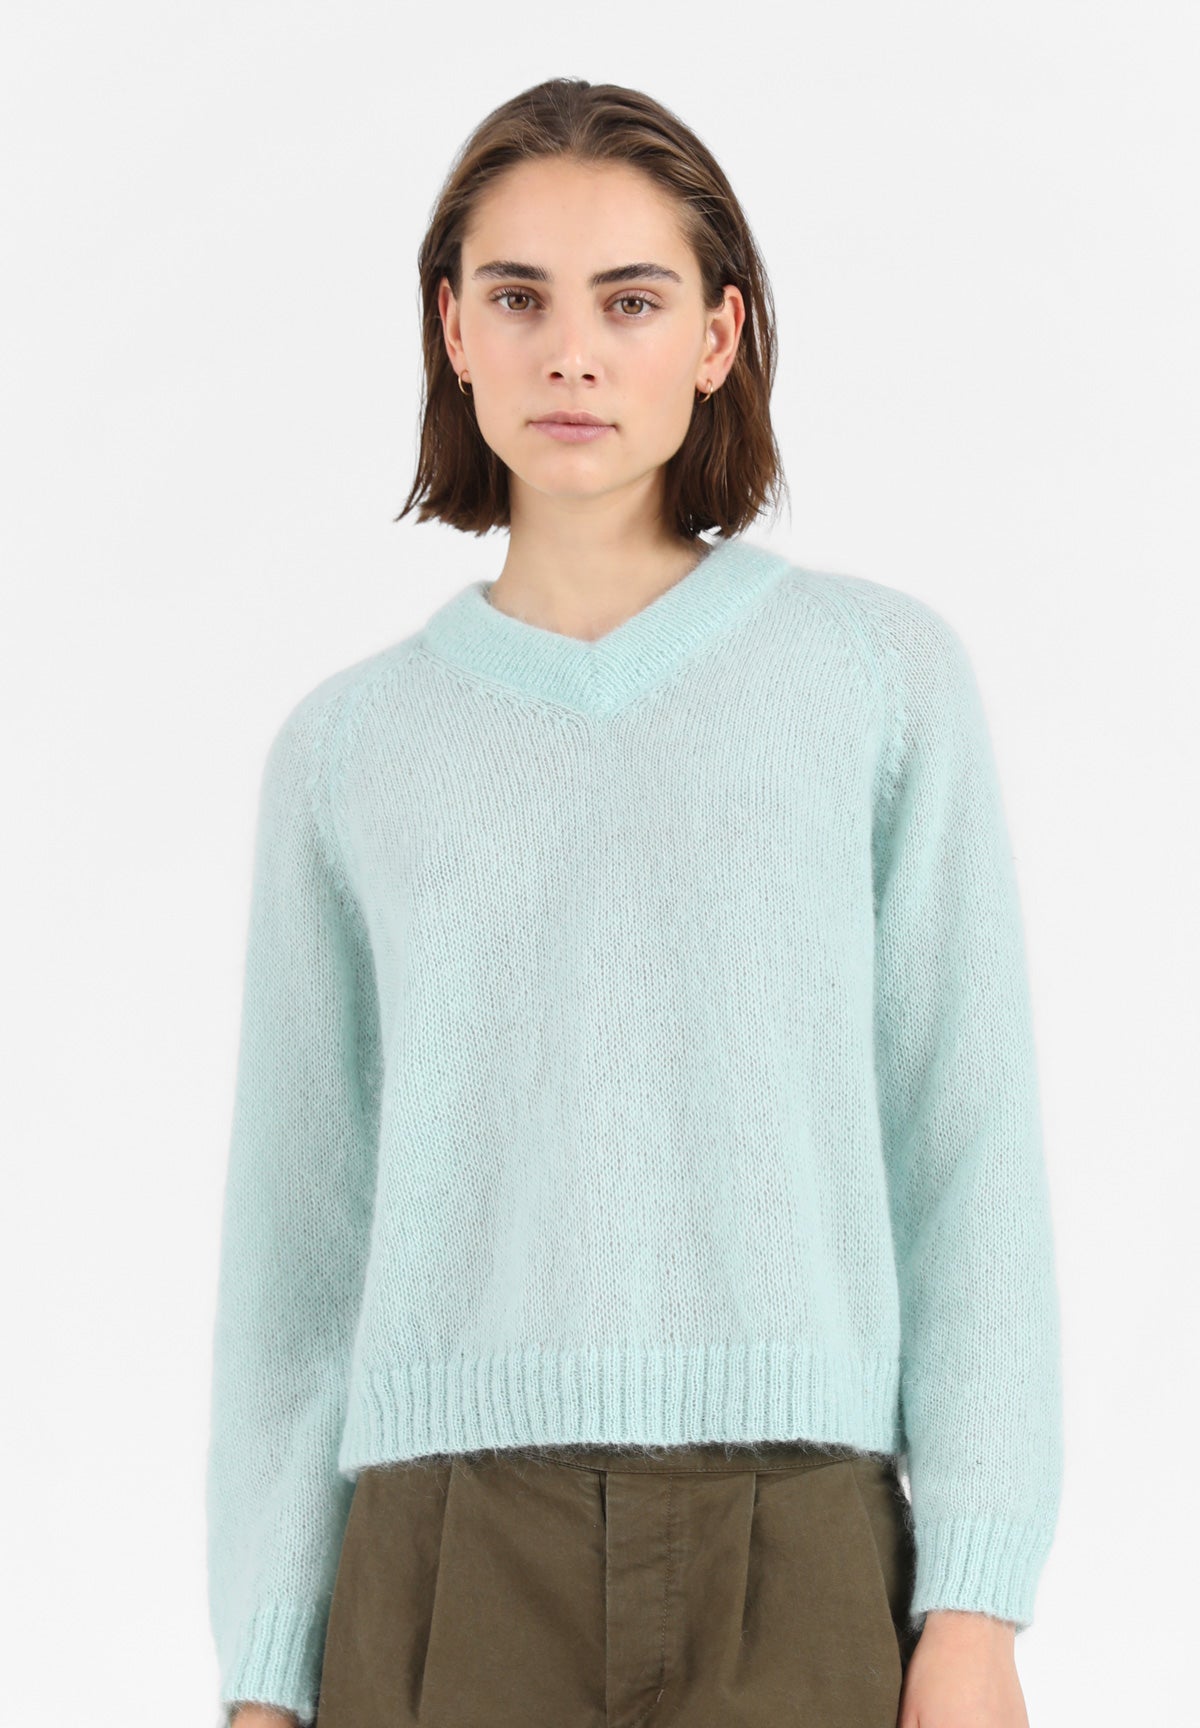 Toluca Sweater